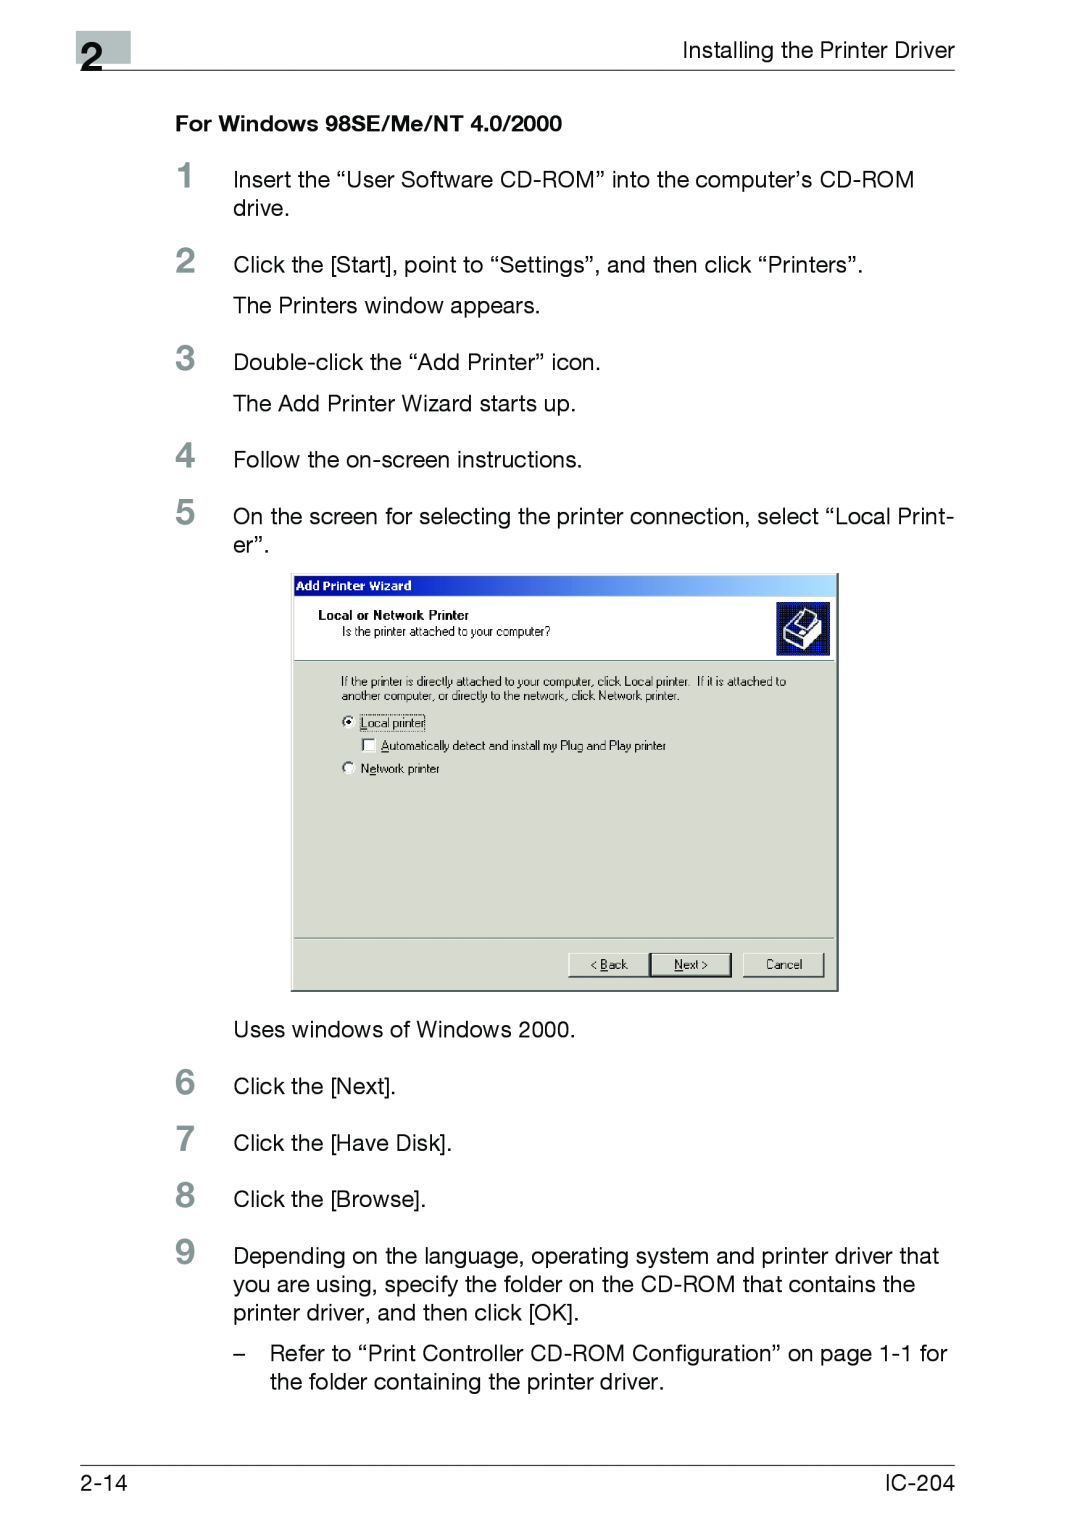 Konica Minolta IC-204 manual For Windows 98SE/Me/NT 4.0/2000 